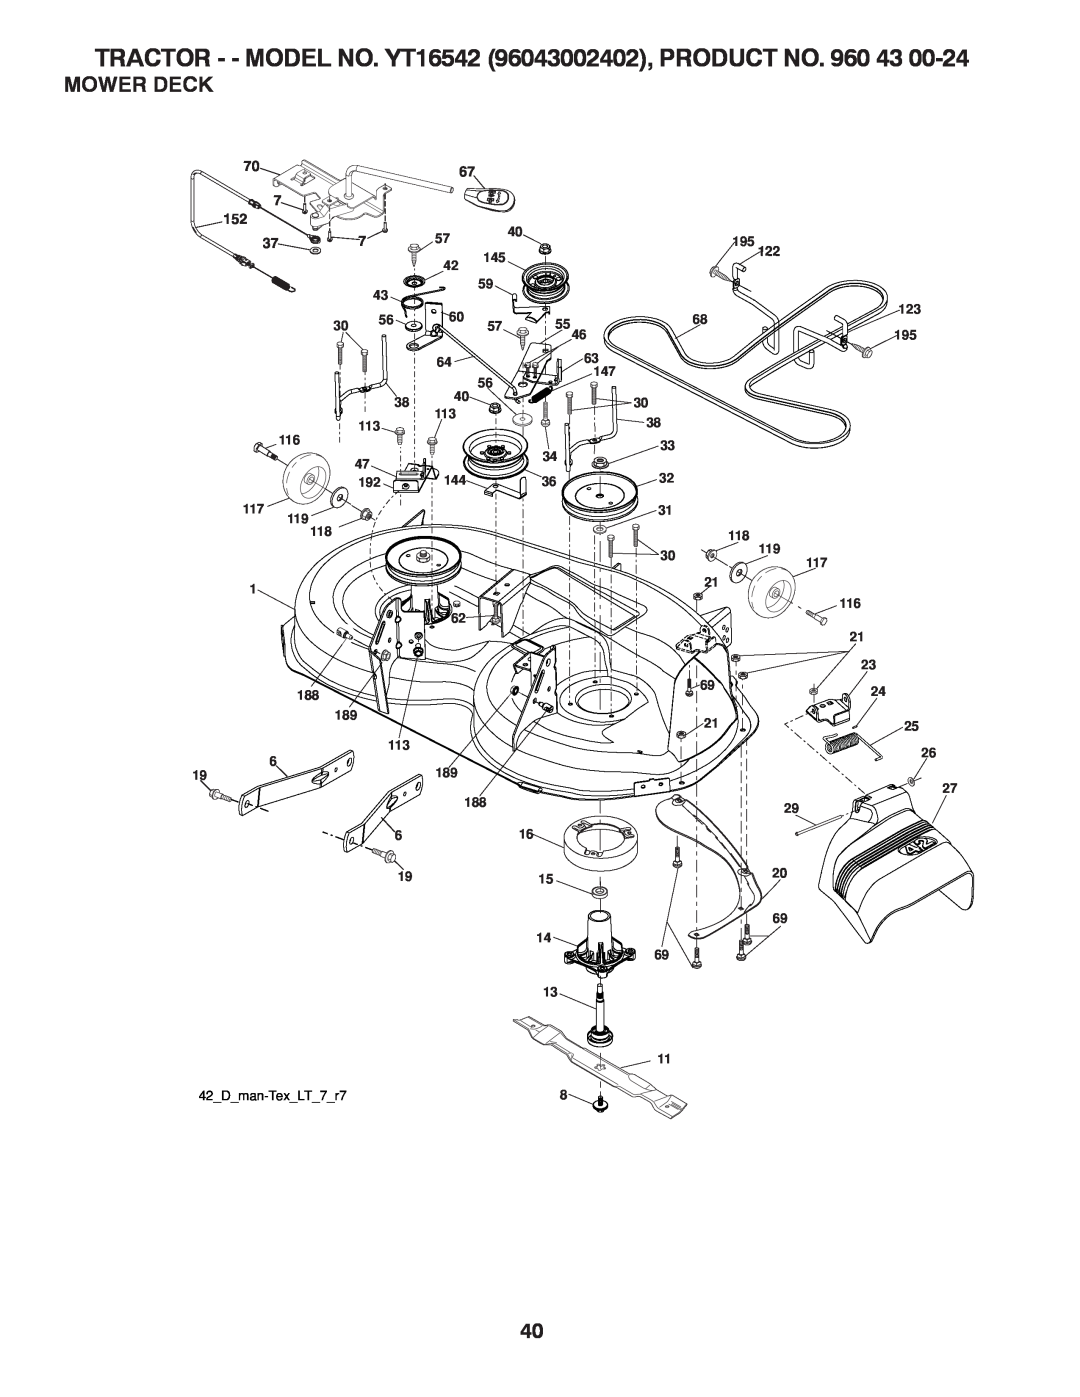 Husqvarna owner manual Mower Deck, TRACTOR - - MODEL NO. YT16542 96043002402, PRODUCT NO. 960 43 